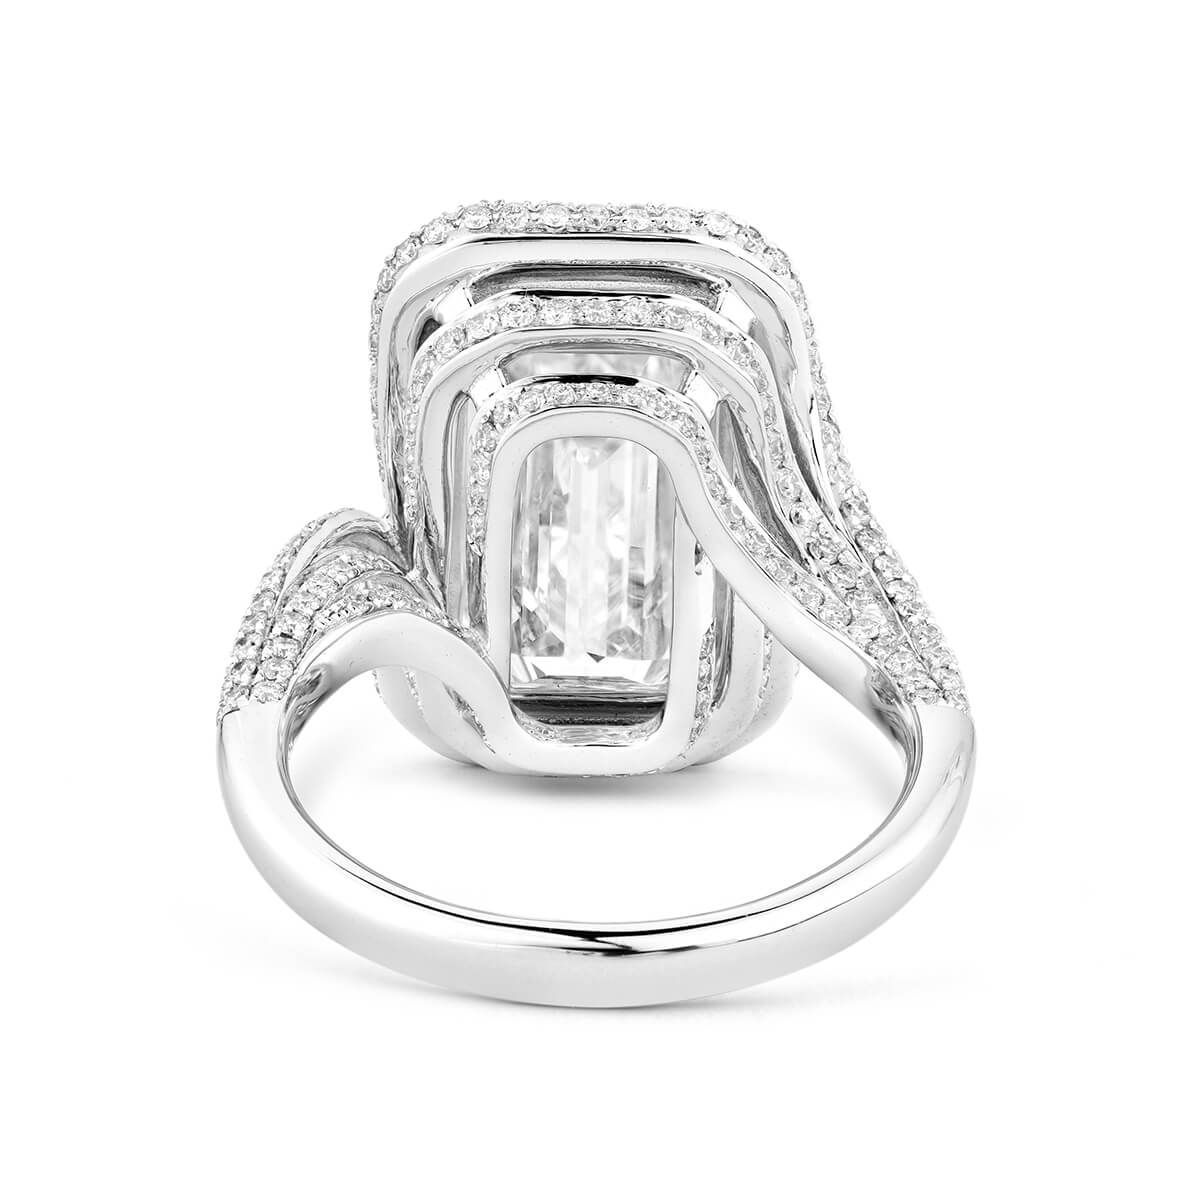  White Diamond Ring, 7.49 Ct. TW, Emerald shape, GIA Certified, 6193392392